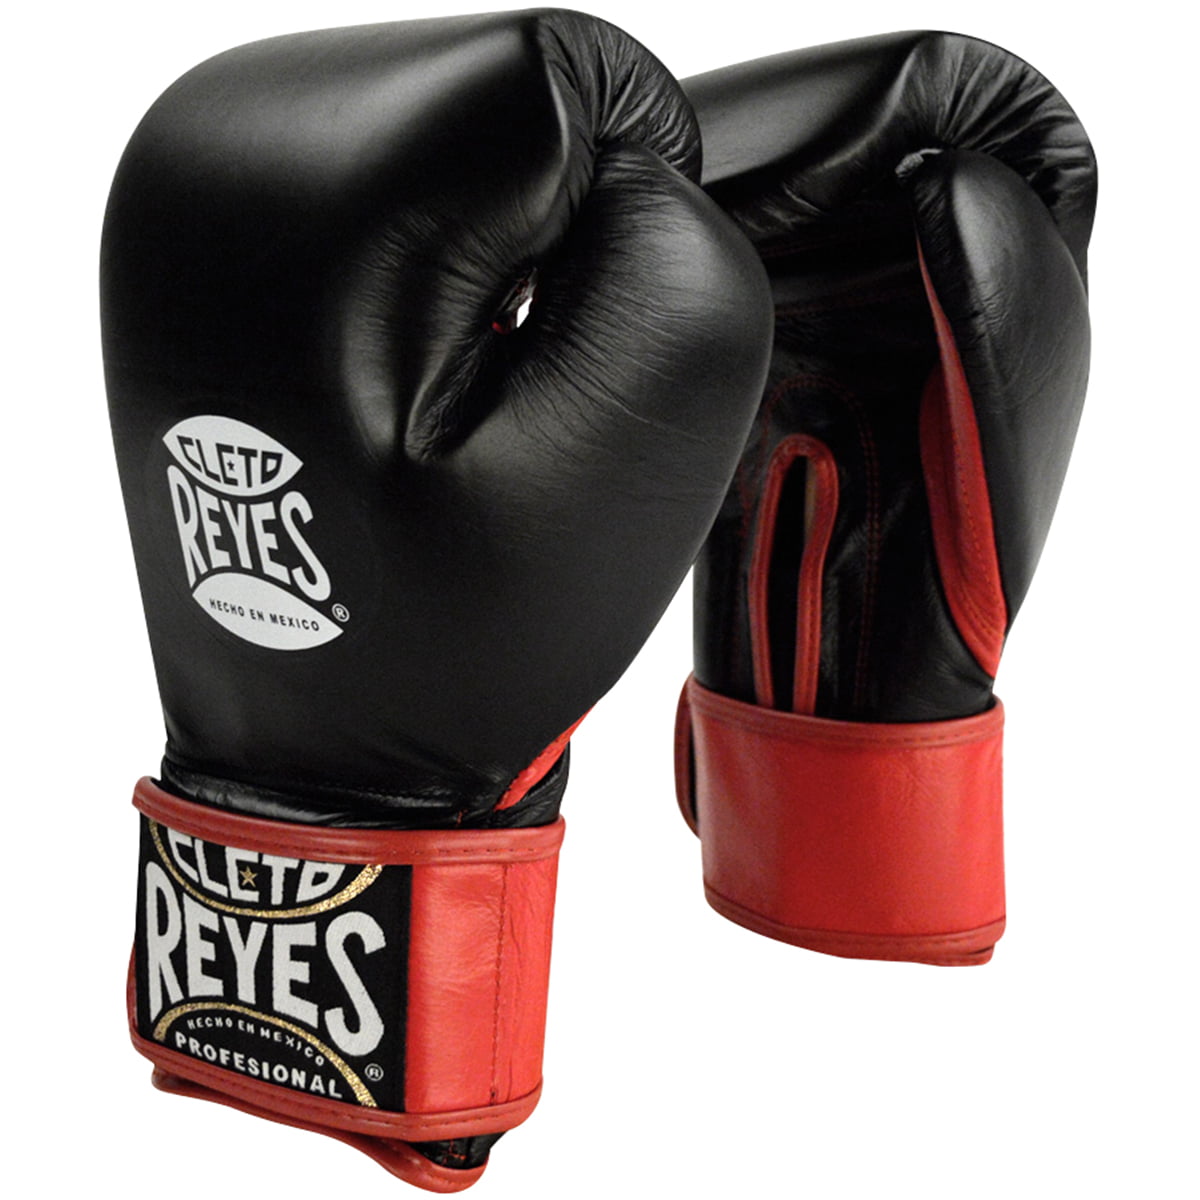 Red Cleto Reyes Extra Padding Leather Boxing Training Gloves 